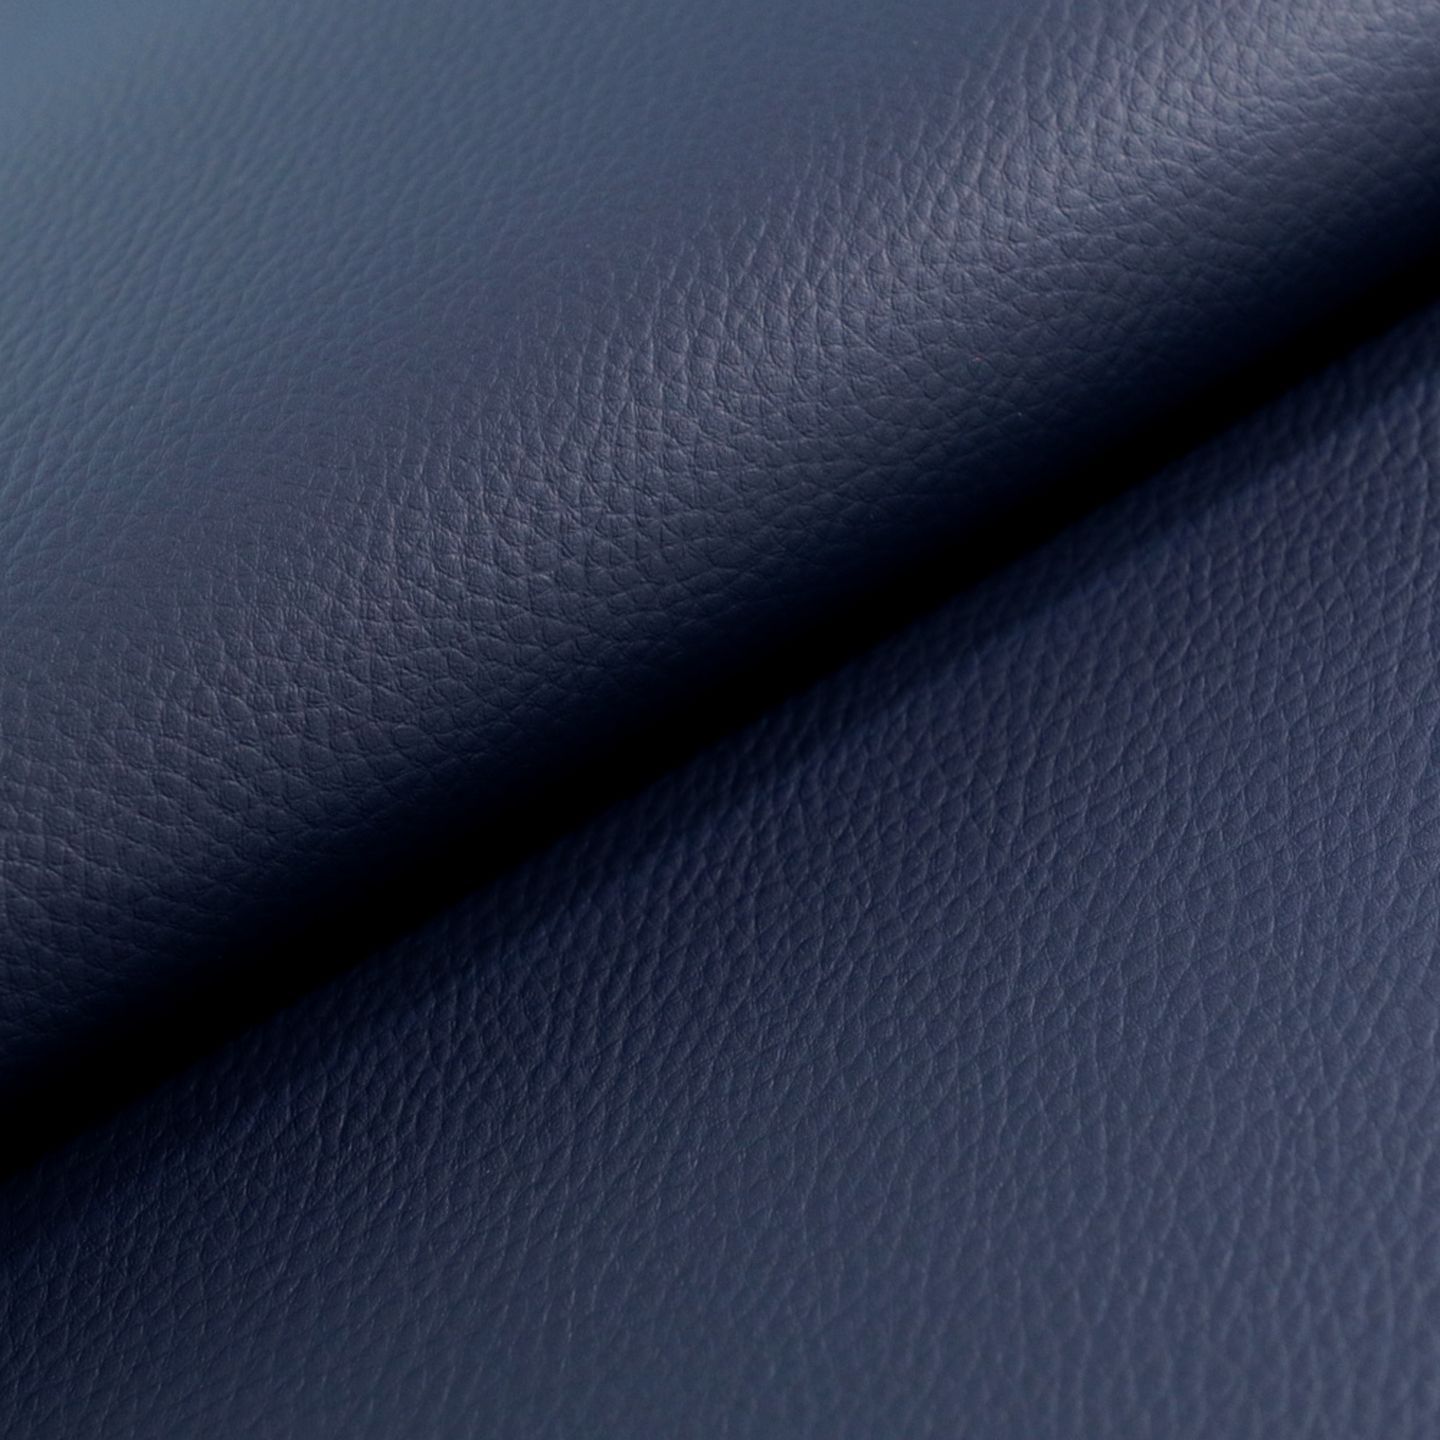 Premium hochwertiges Nappa-Möbel-Kunstleder in dunkel blau